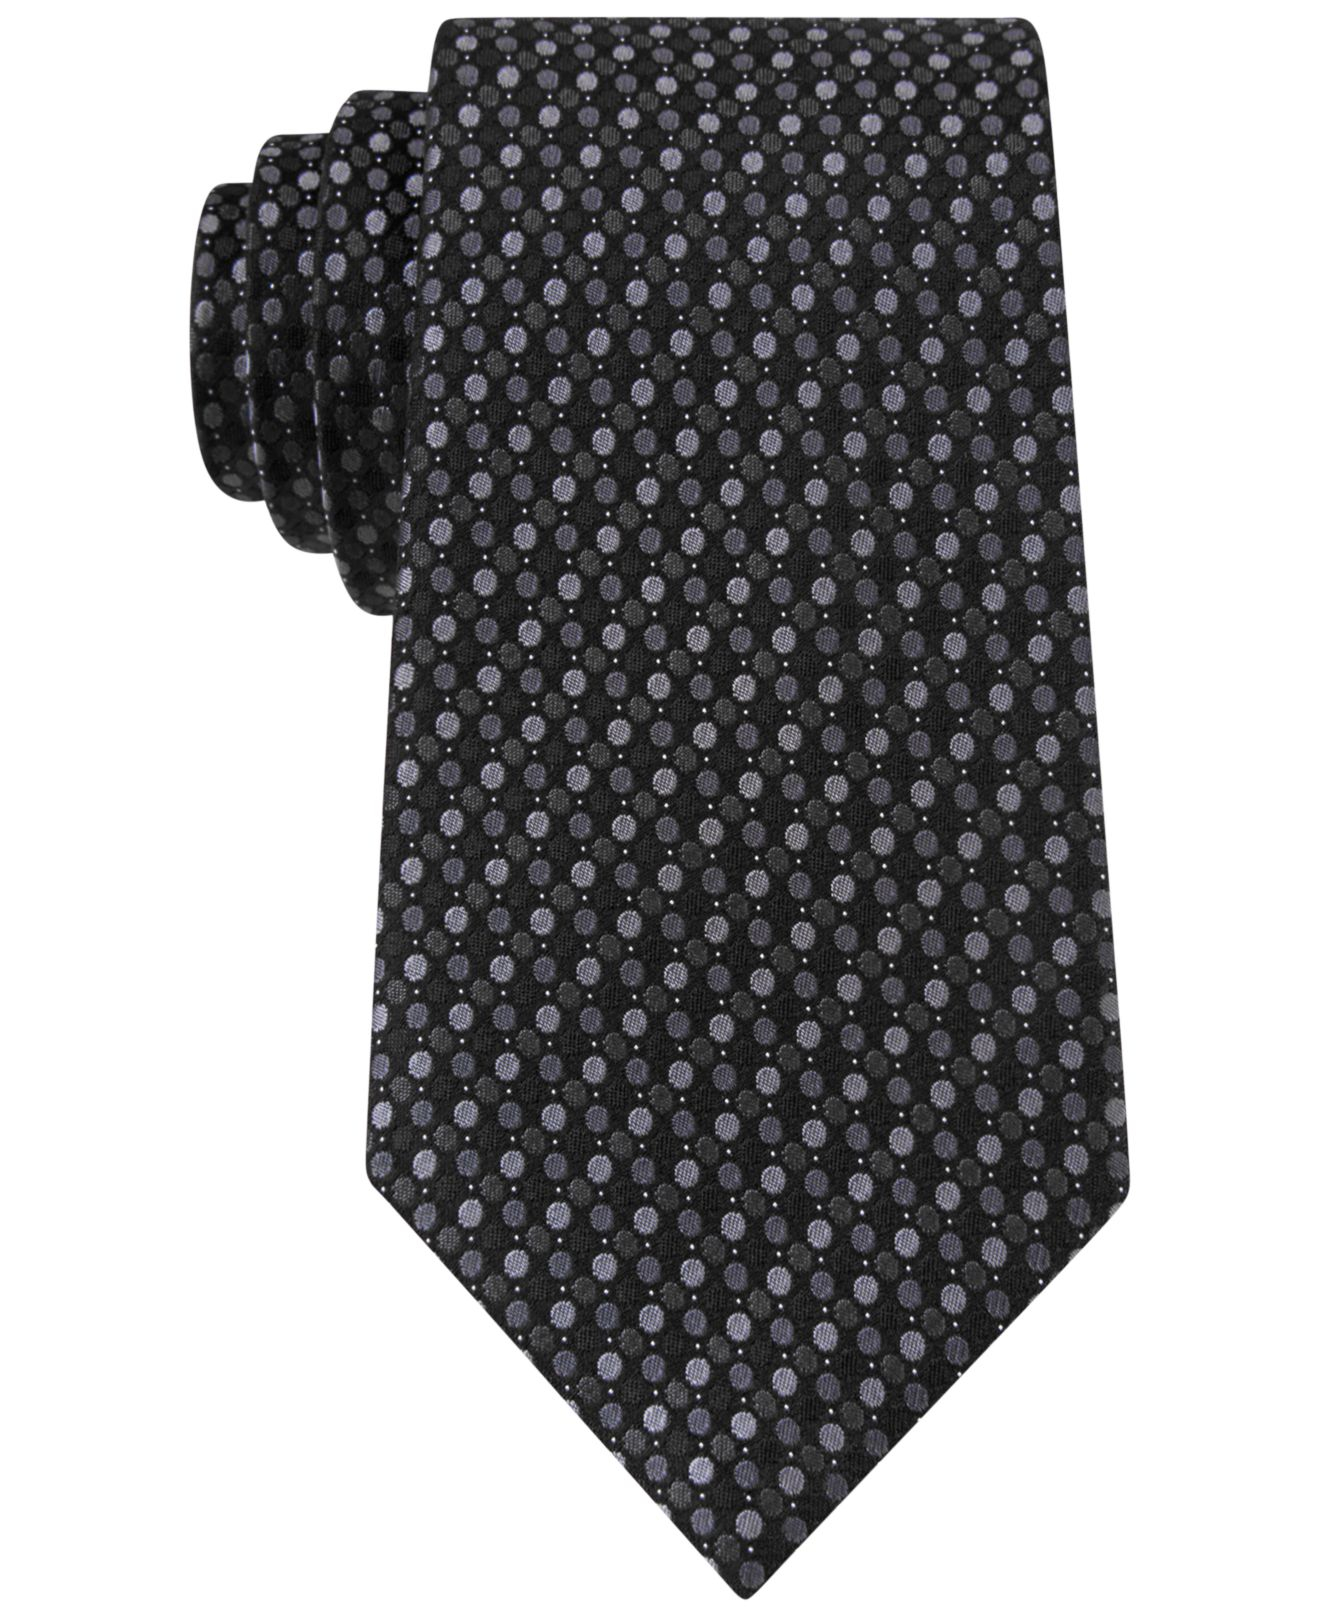 Lyst - Kenneth Cole Reaction Multi-dot Tie in Black for Men